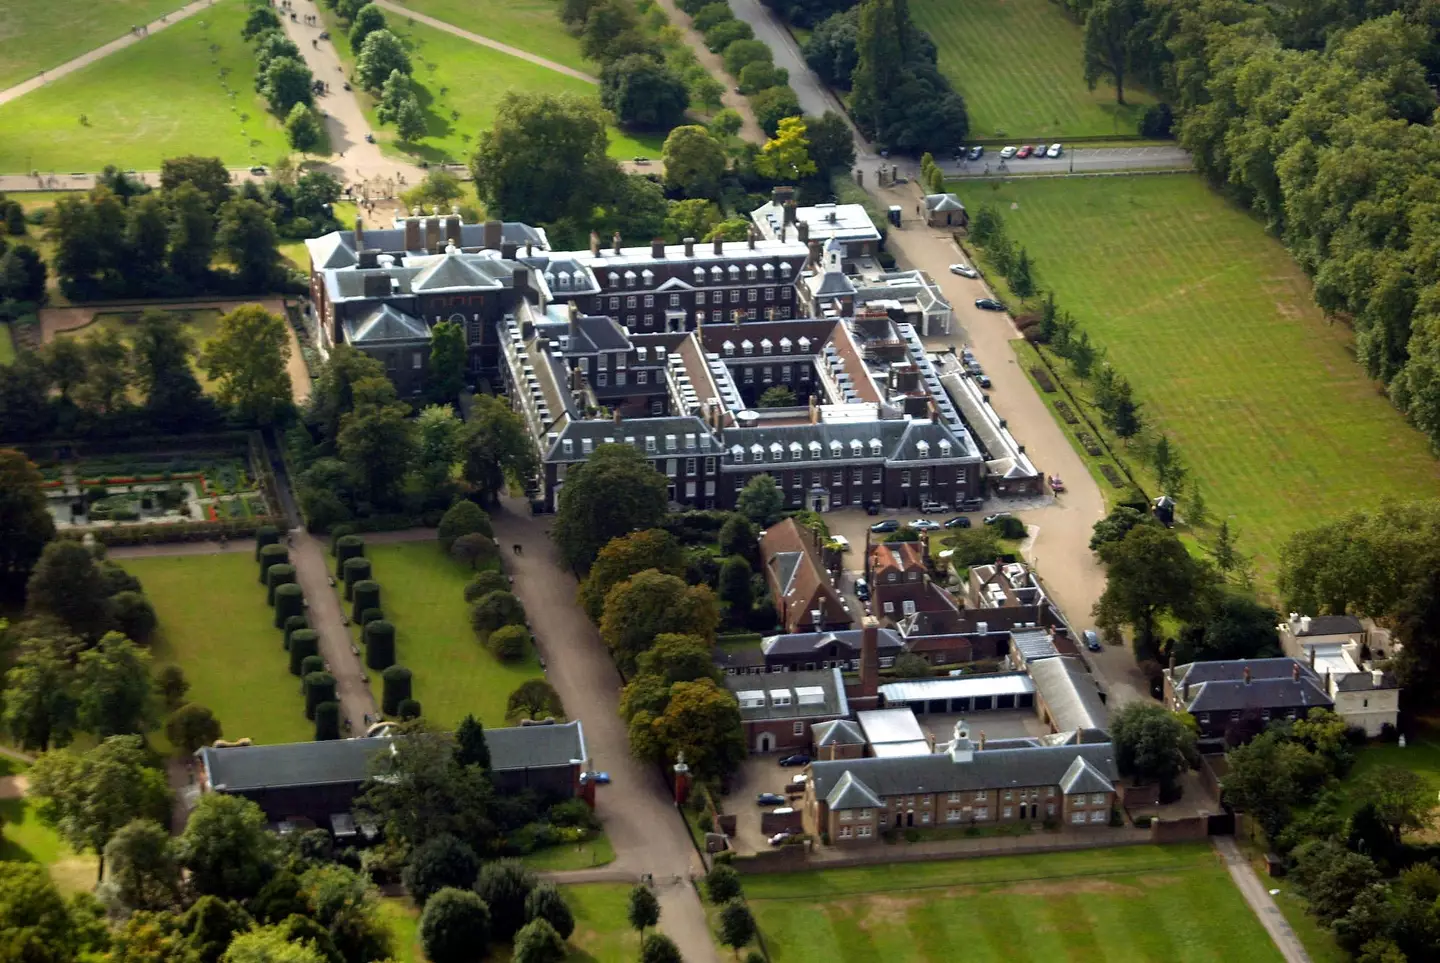 Nottingham Cottage sits on the ground of Kensington Palace.